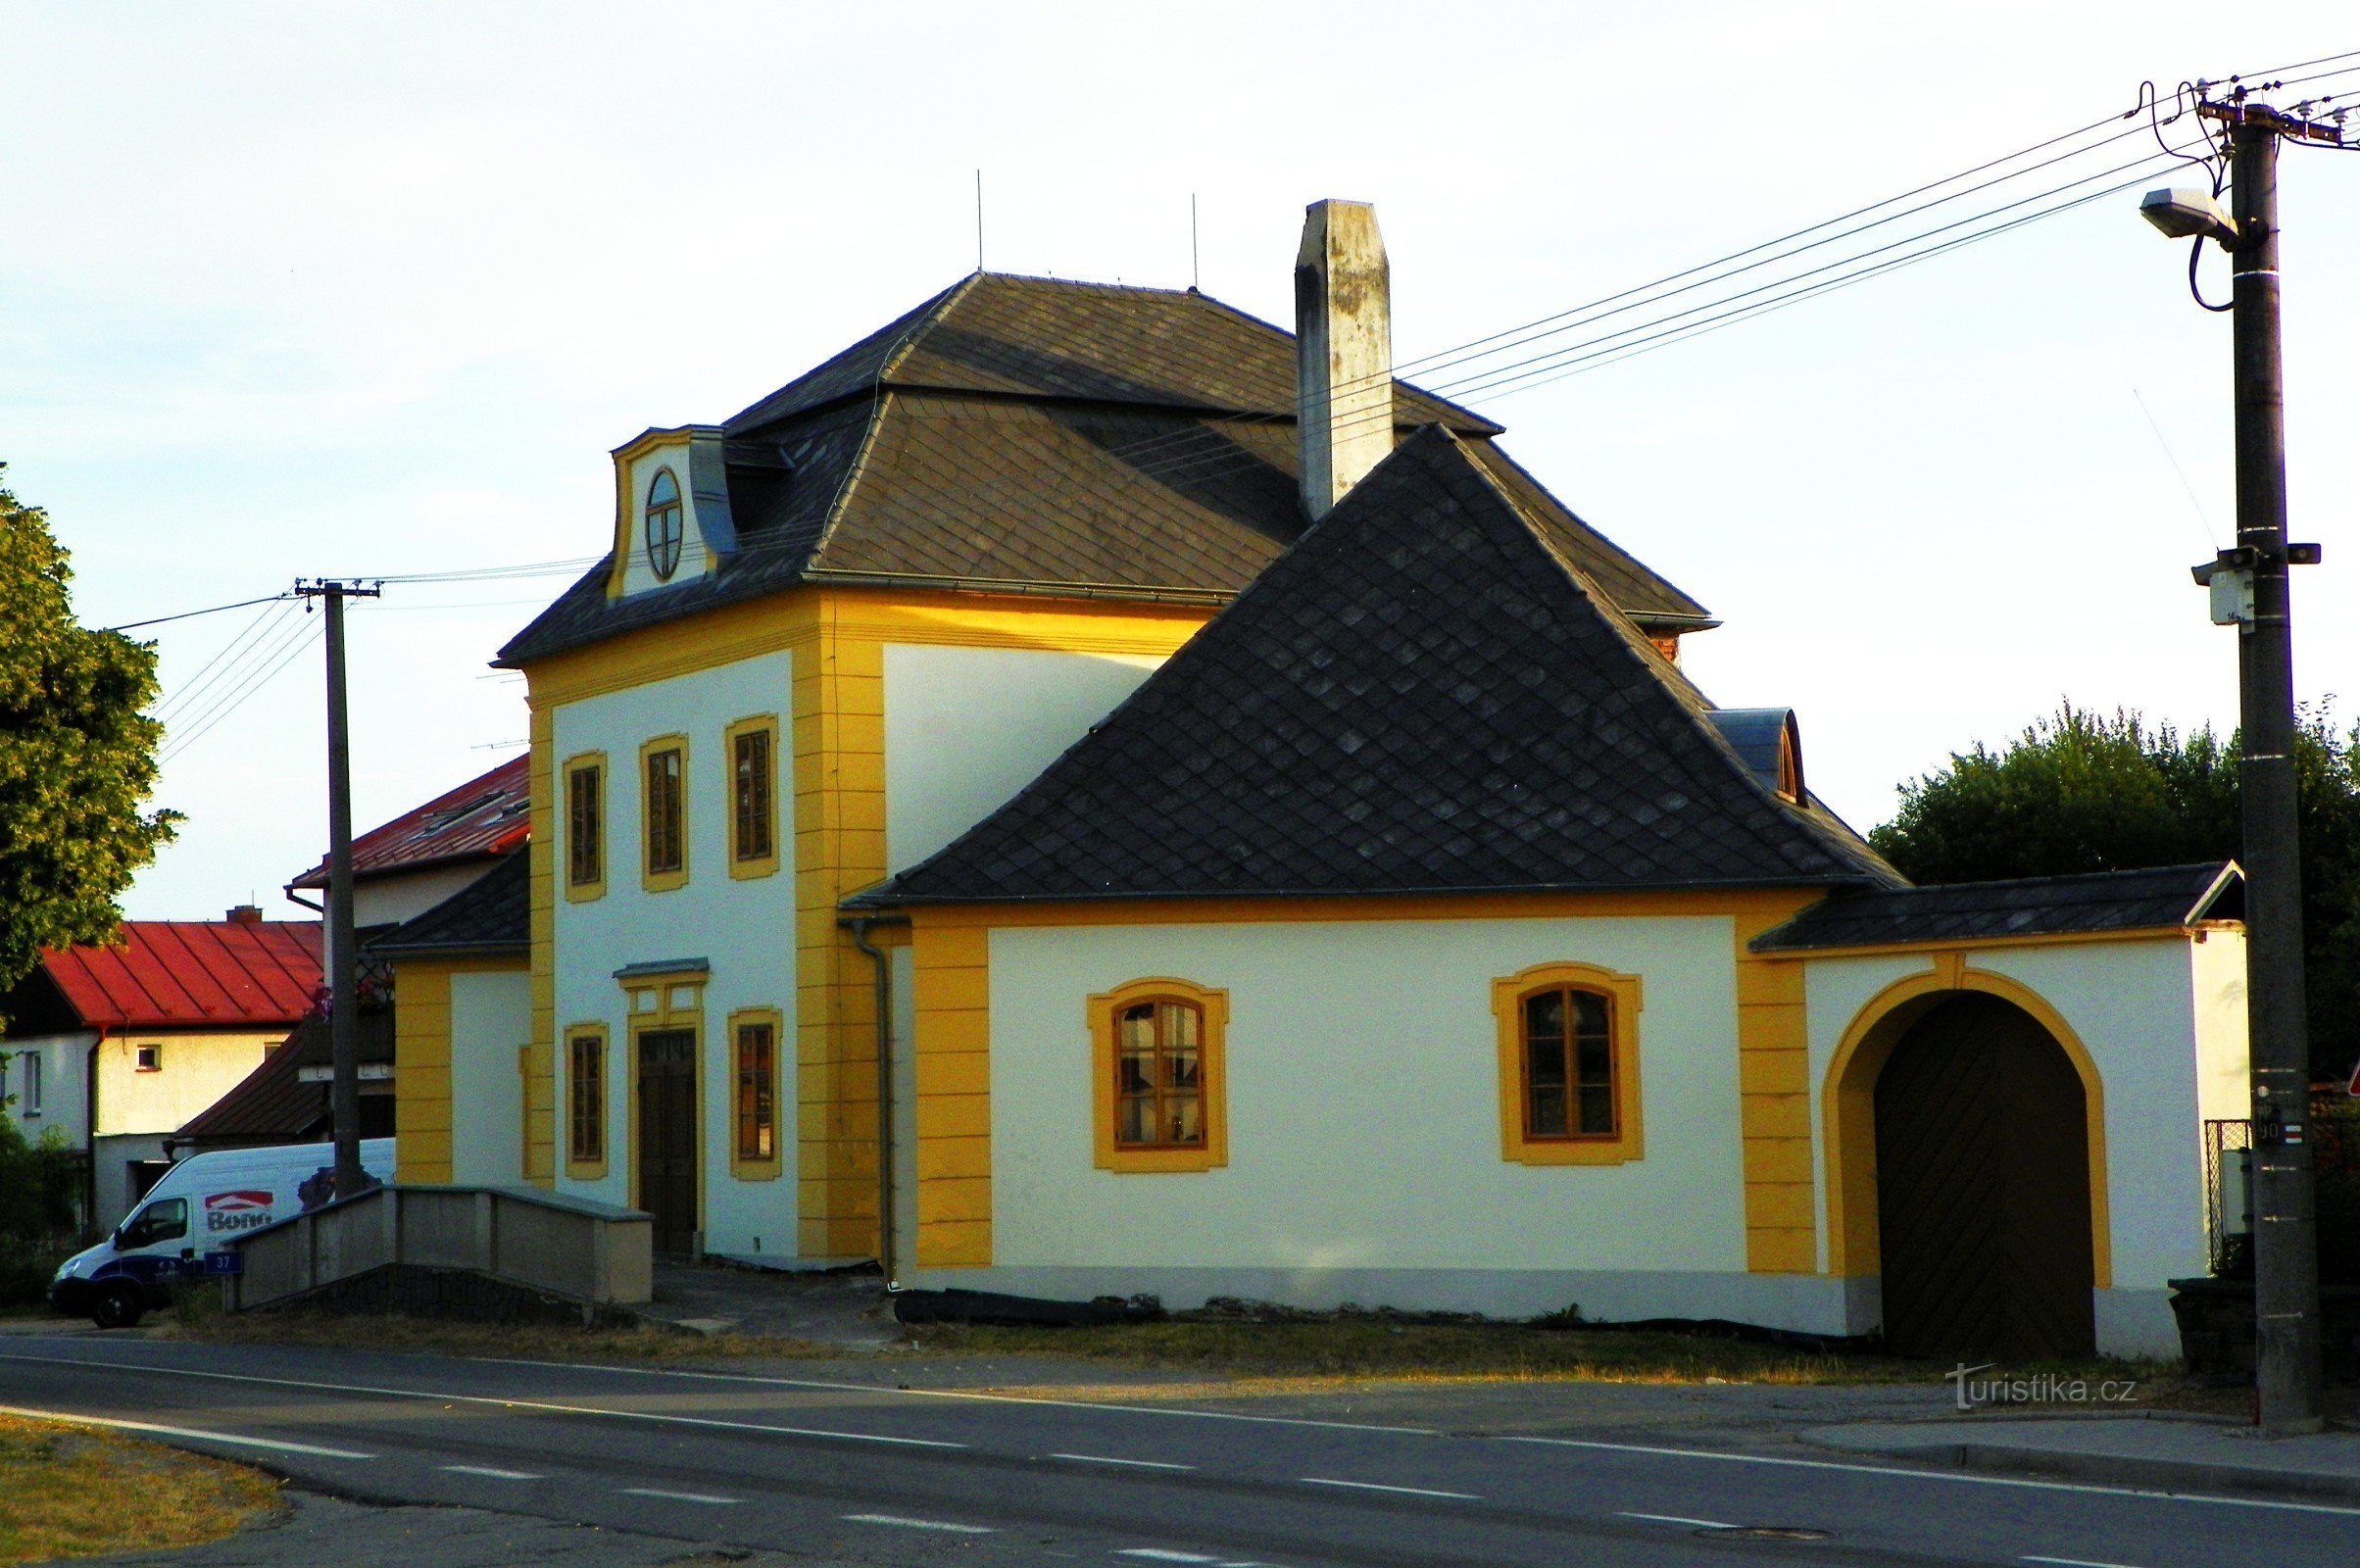 Nhà trọ của Santini ở Ostrov nad Oslavou